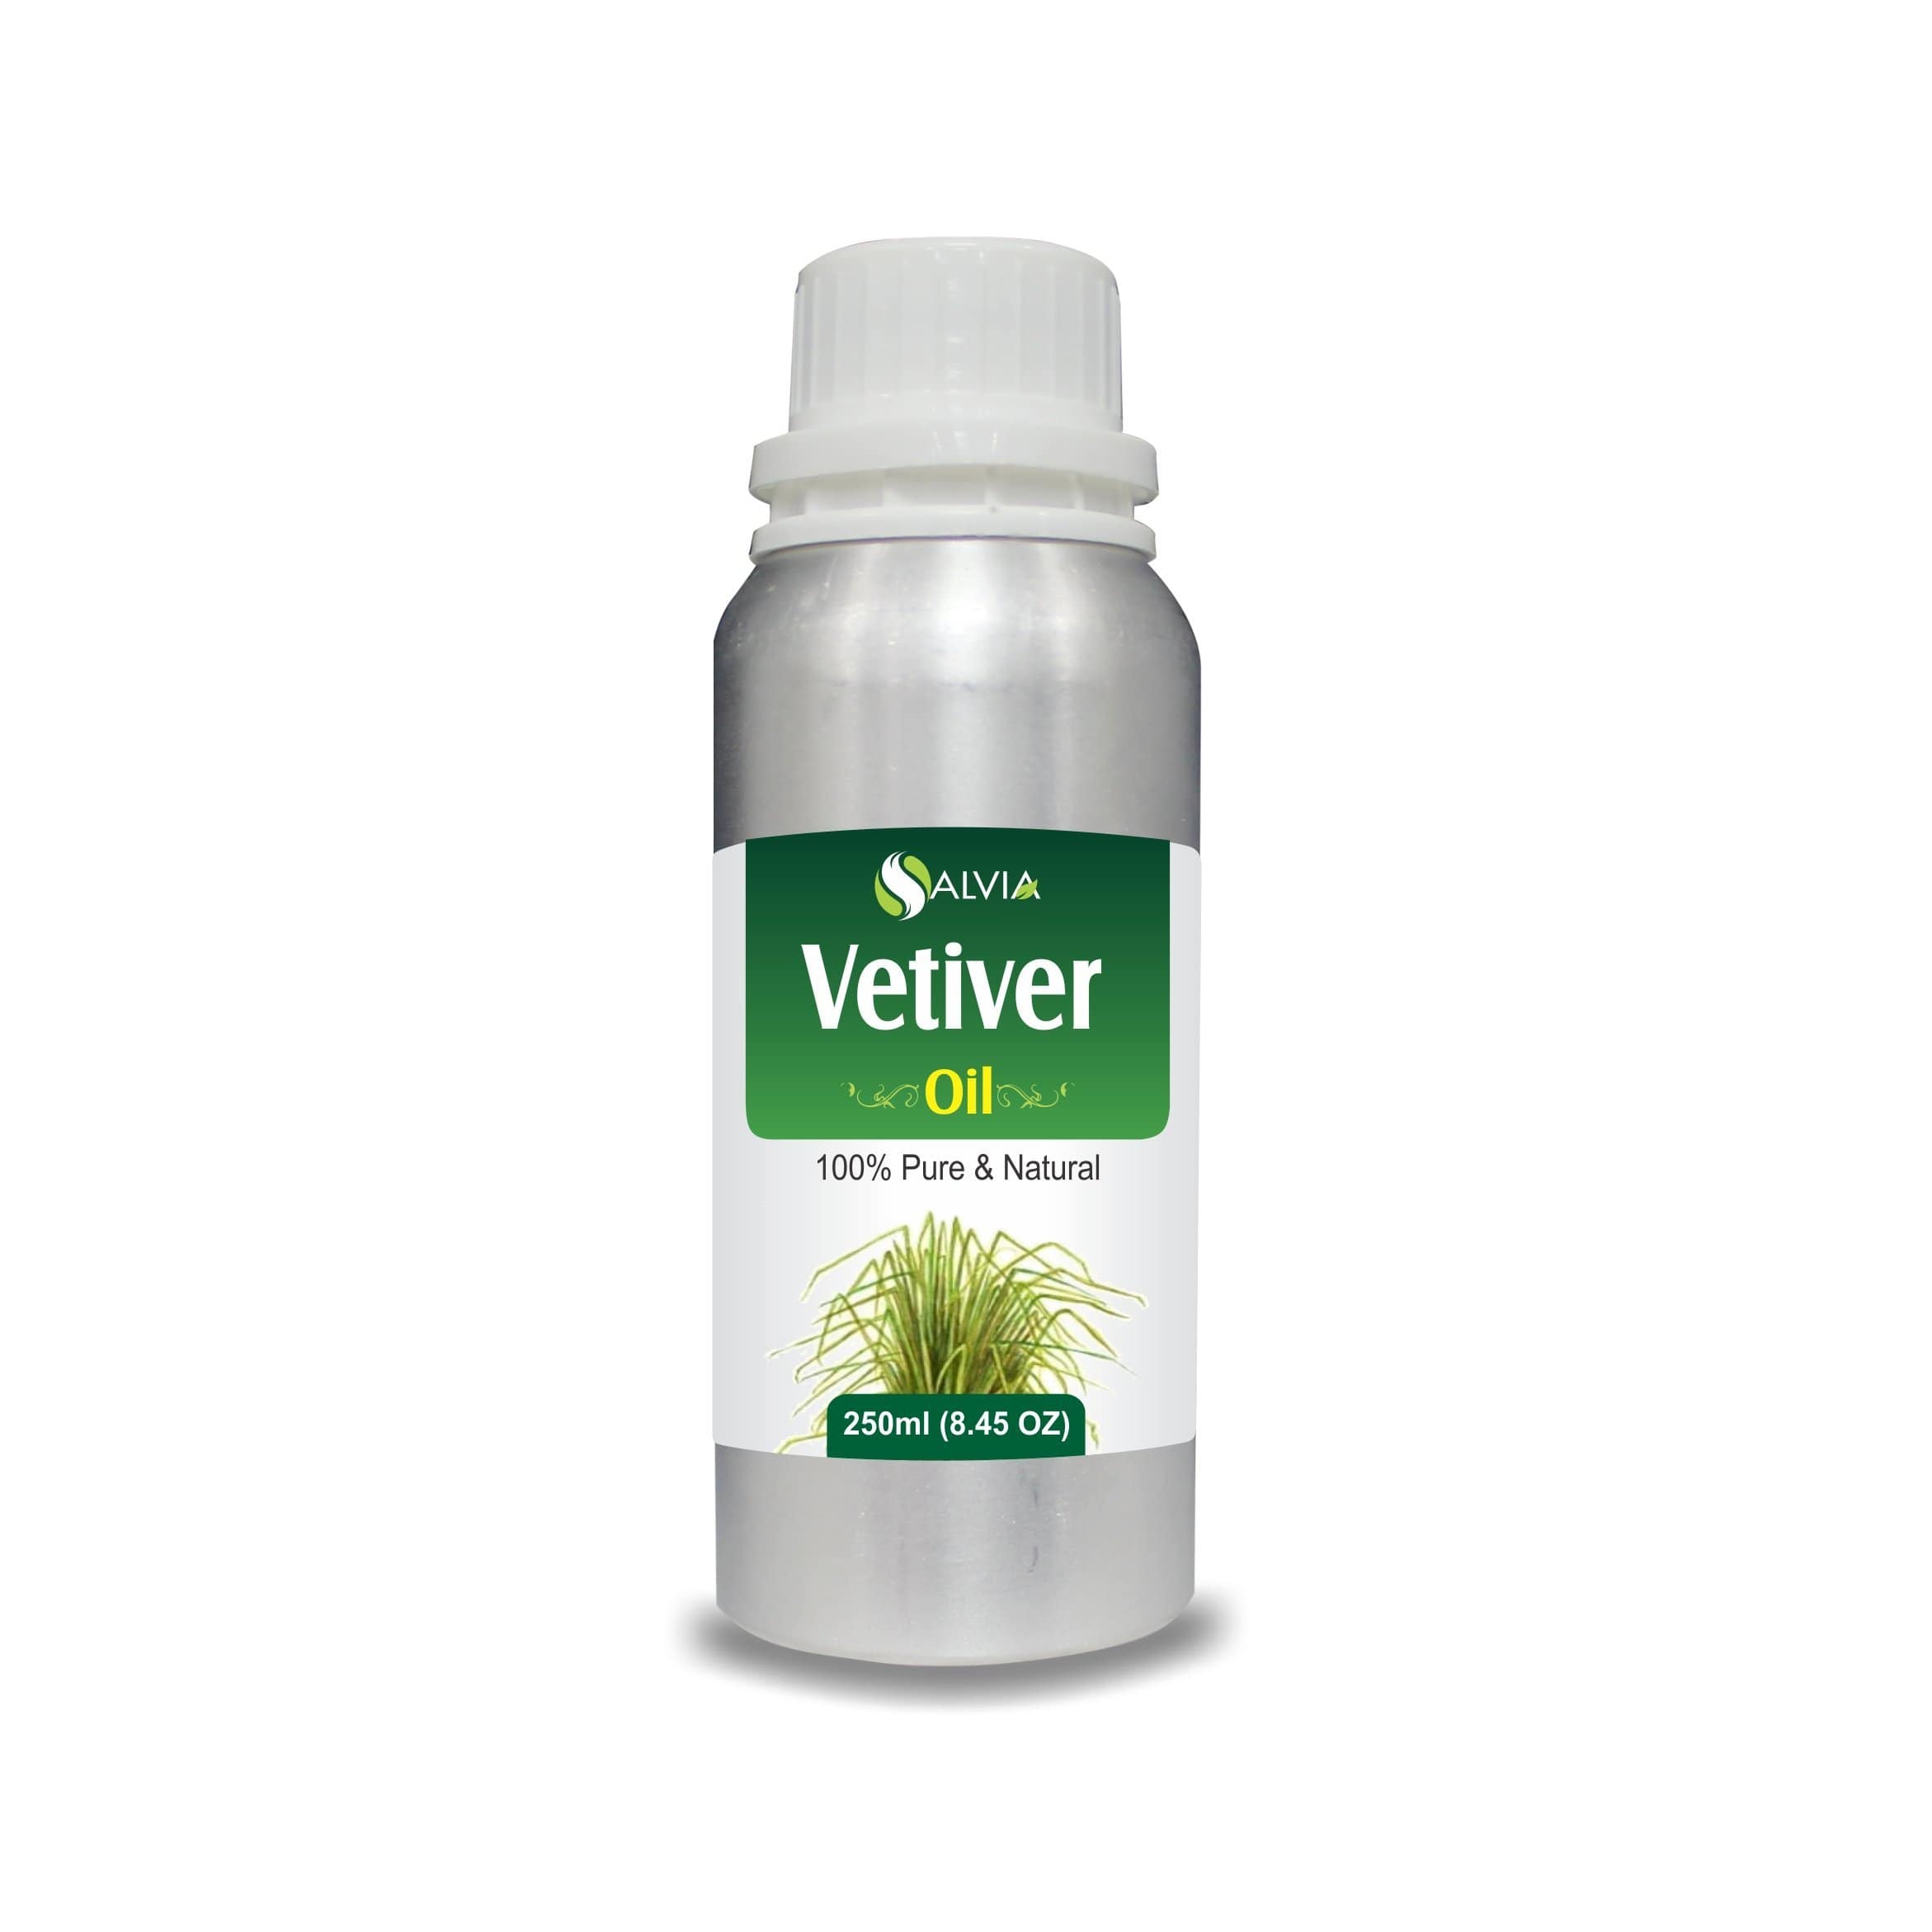 vetiver oil benefits 